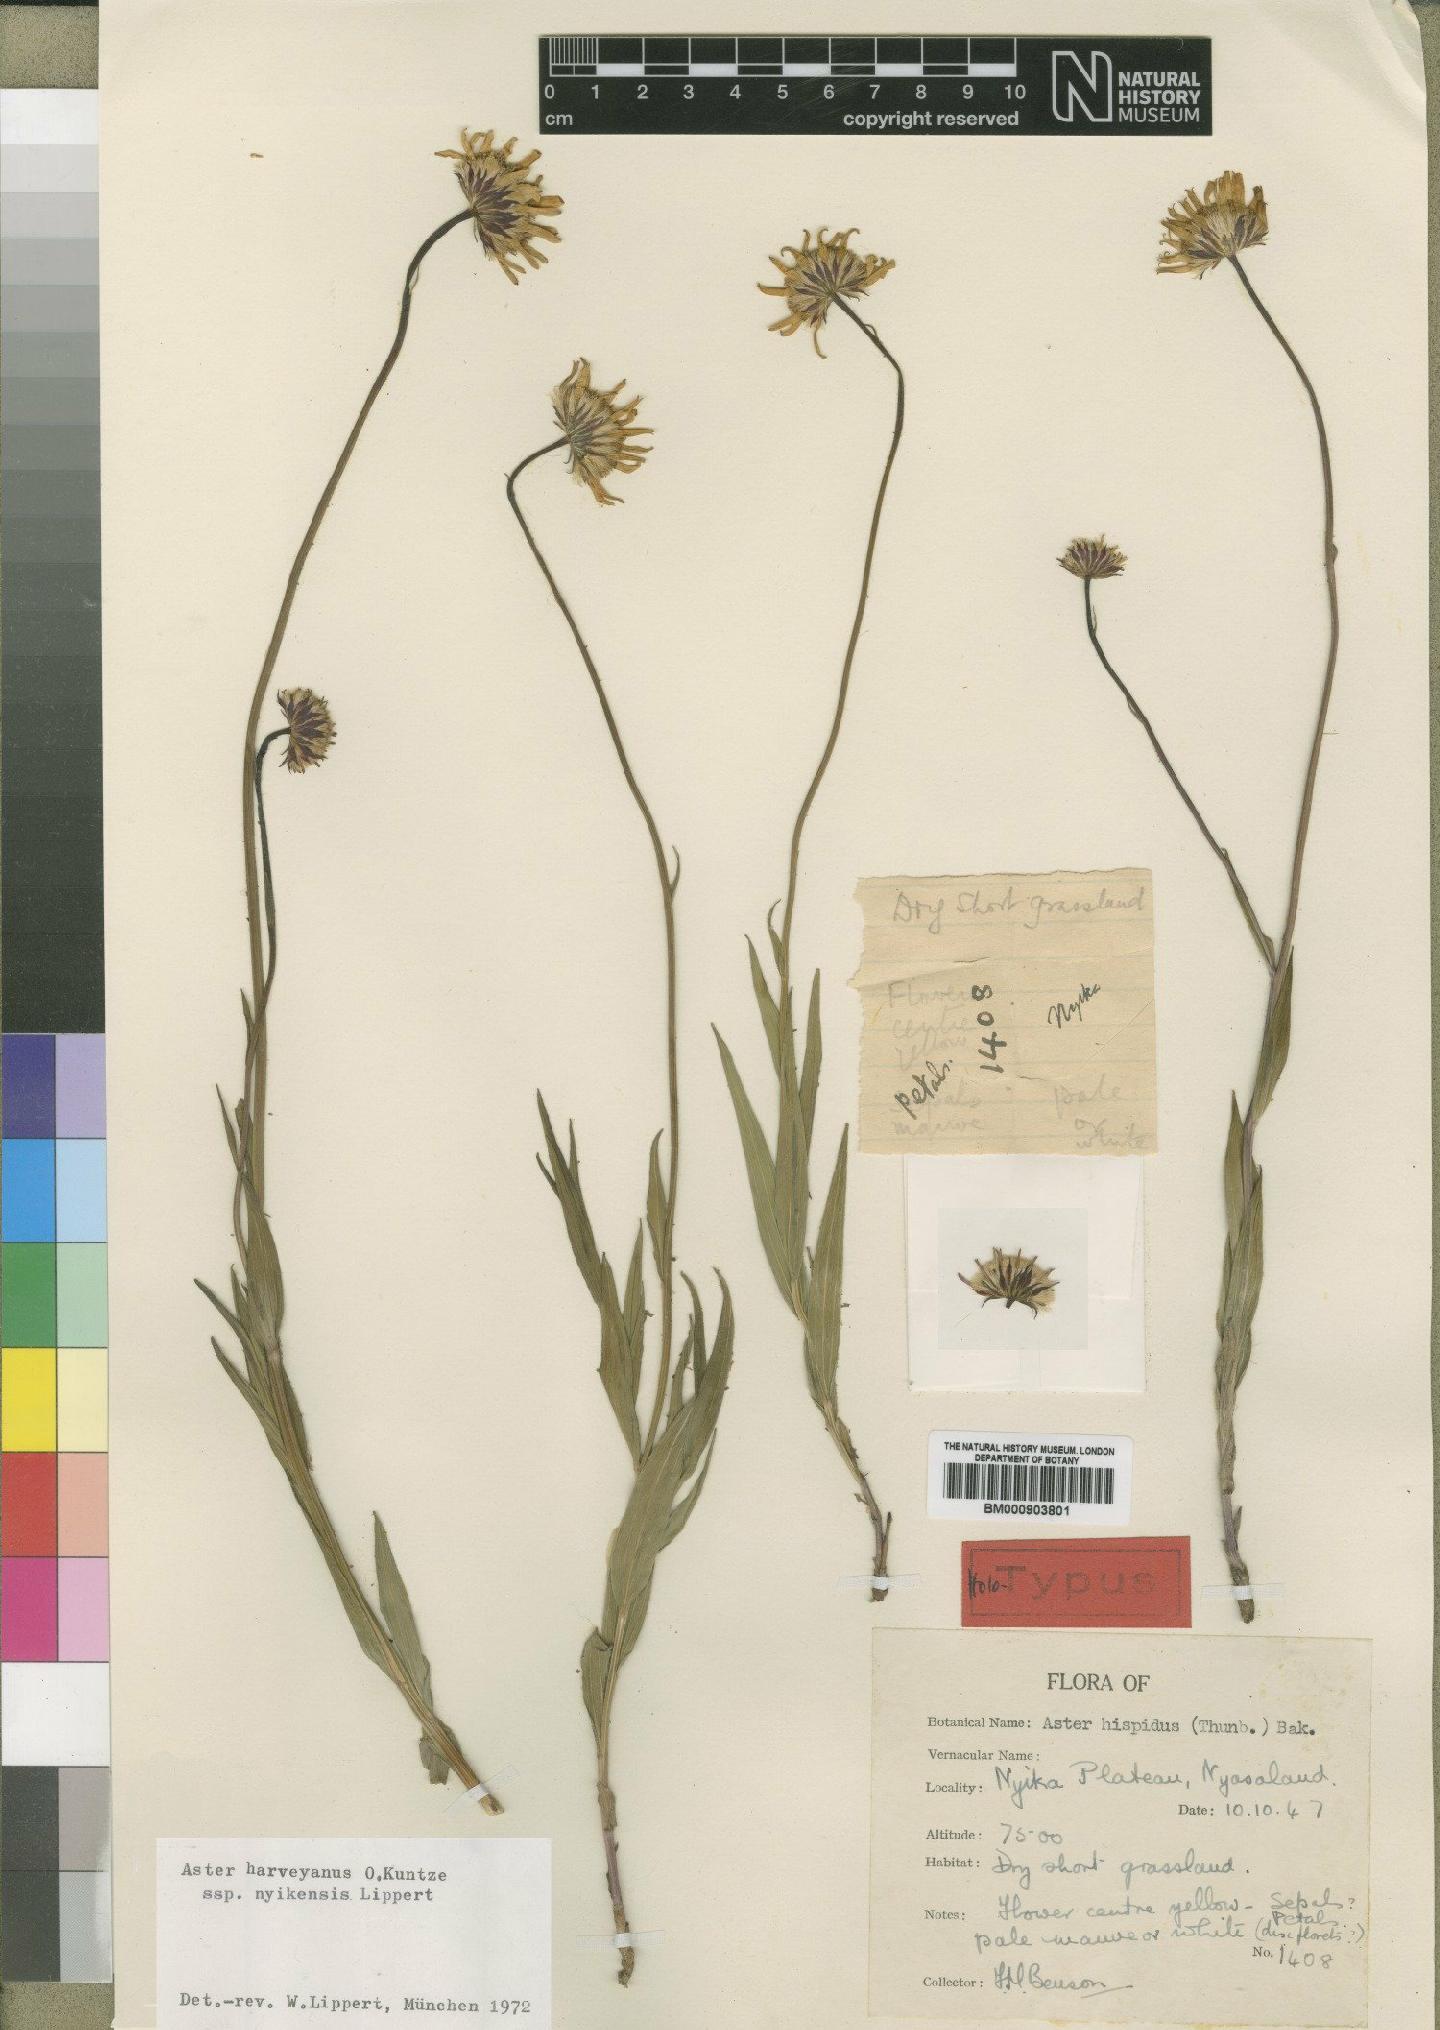 To NHMUK collection (Aster harveyanus subsp. nyikensis Lippert; Holotype; NHMUK:ecatalogue:4528767)